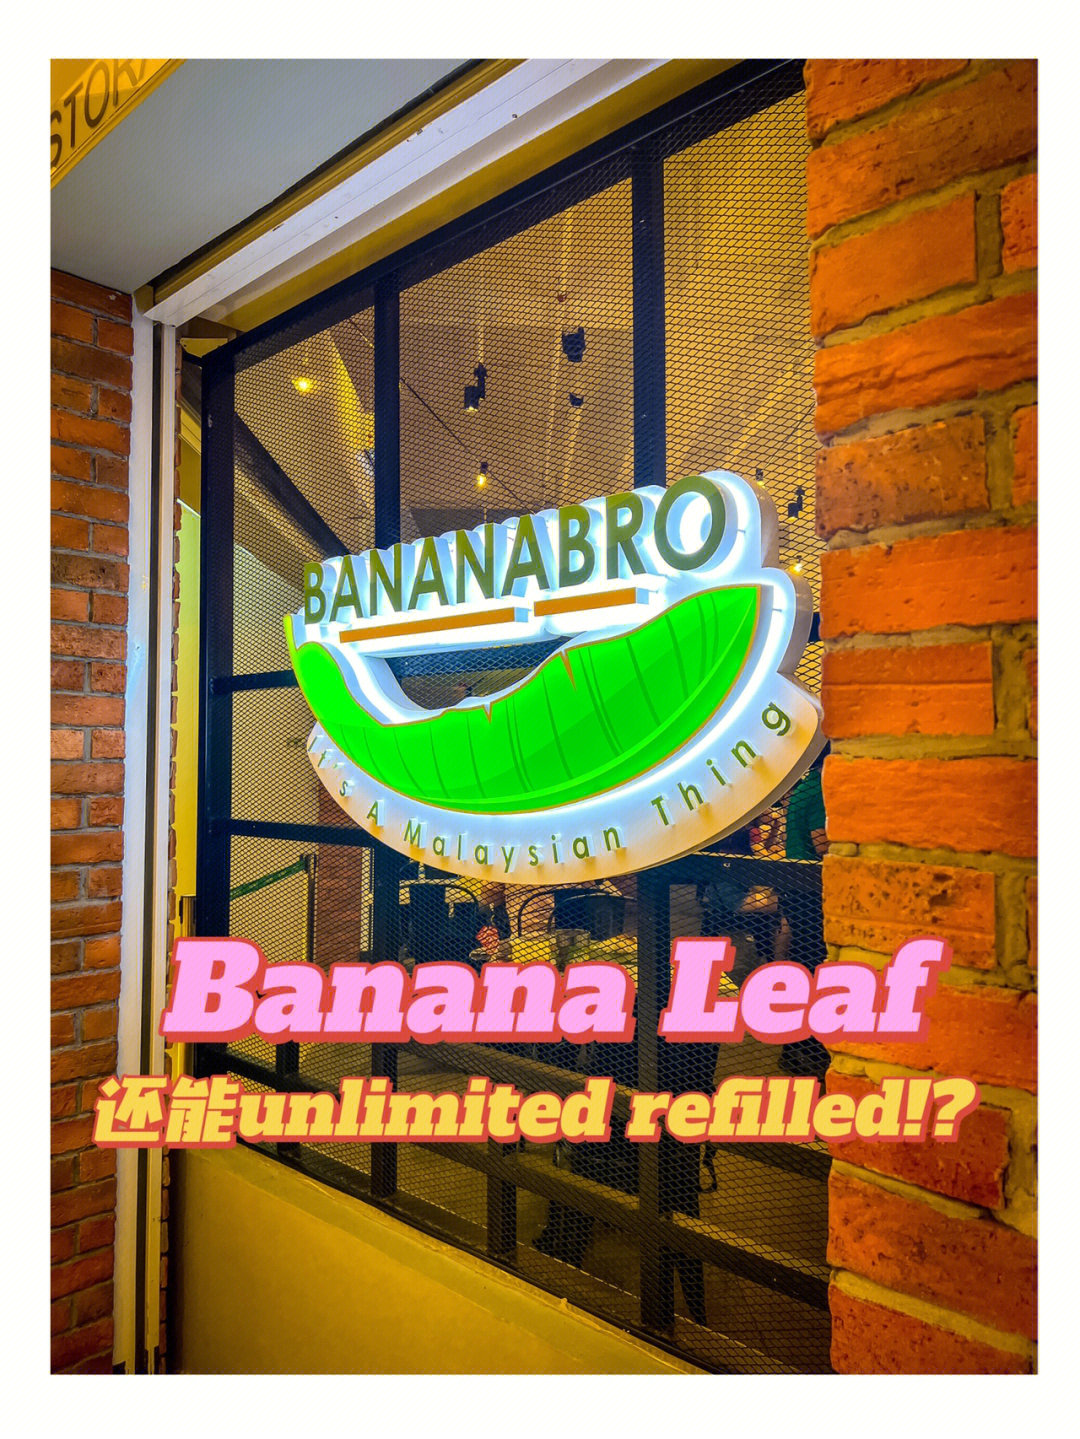 banana leaf 还能unlimited refilled!